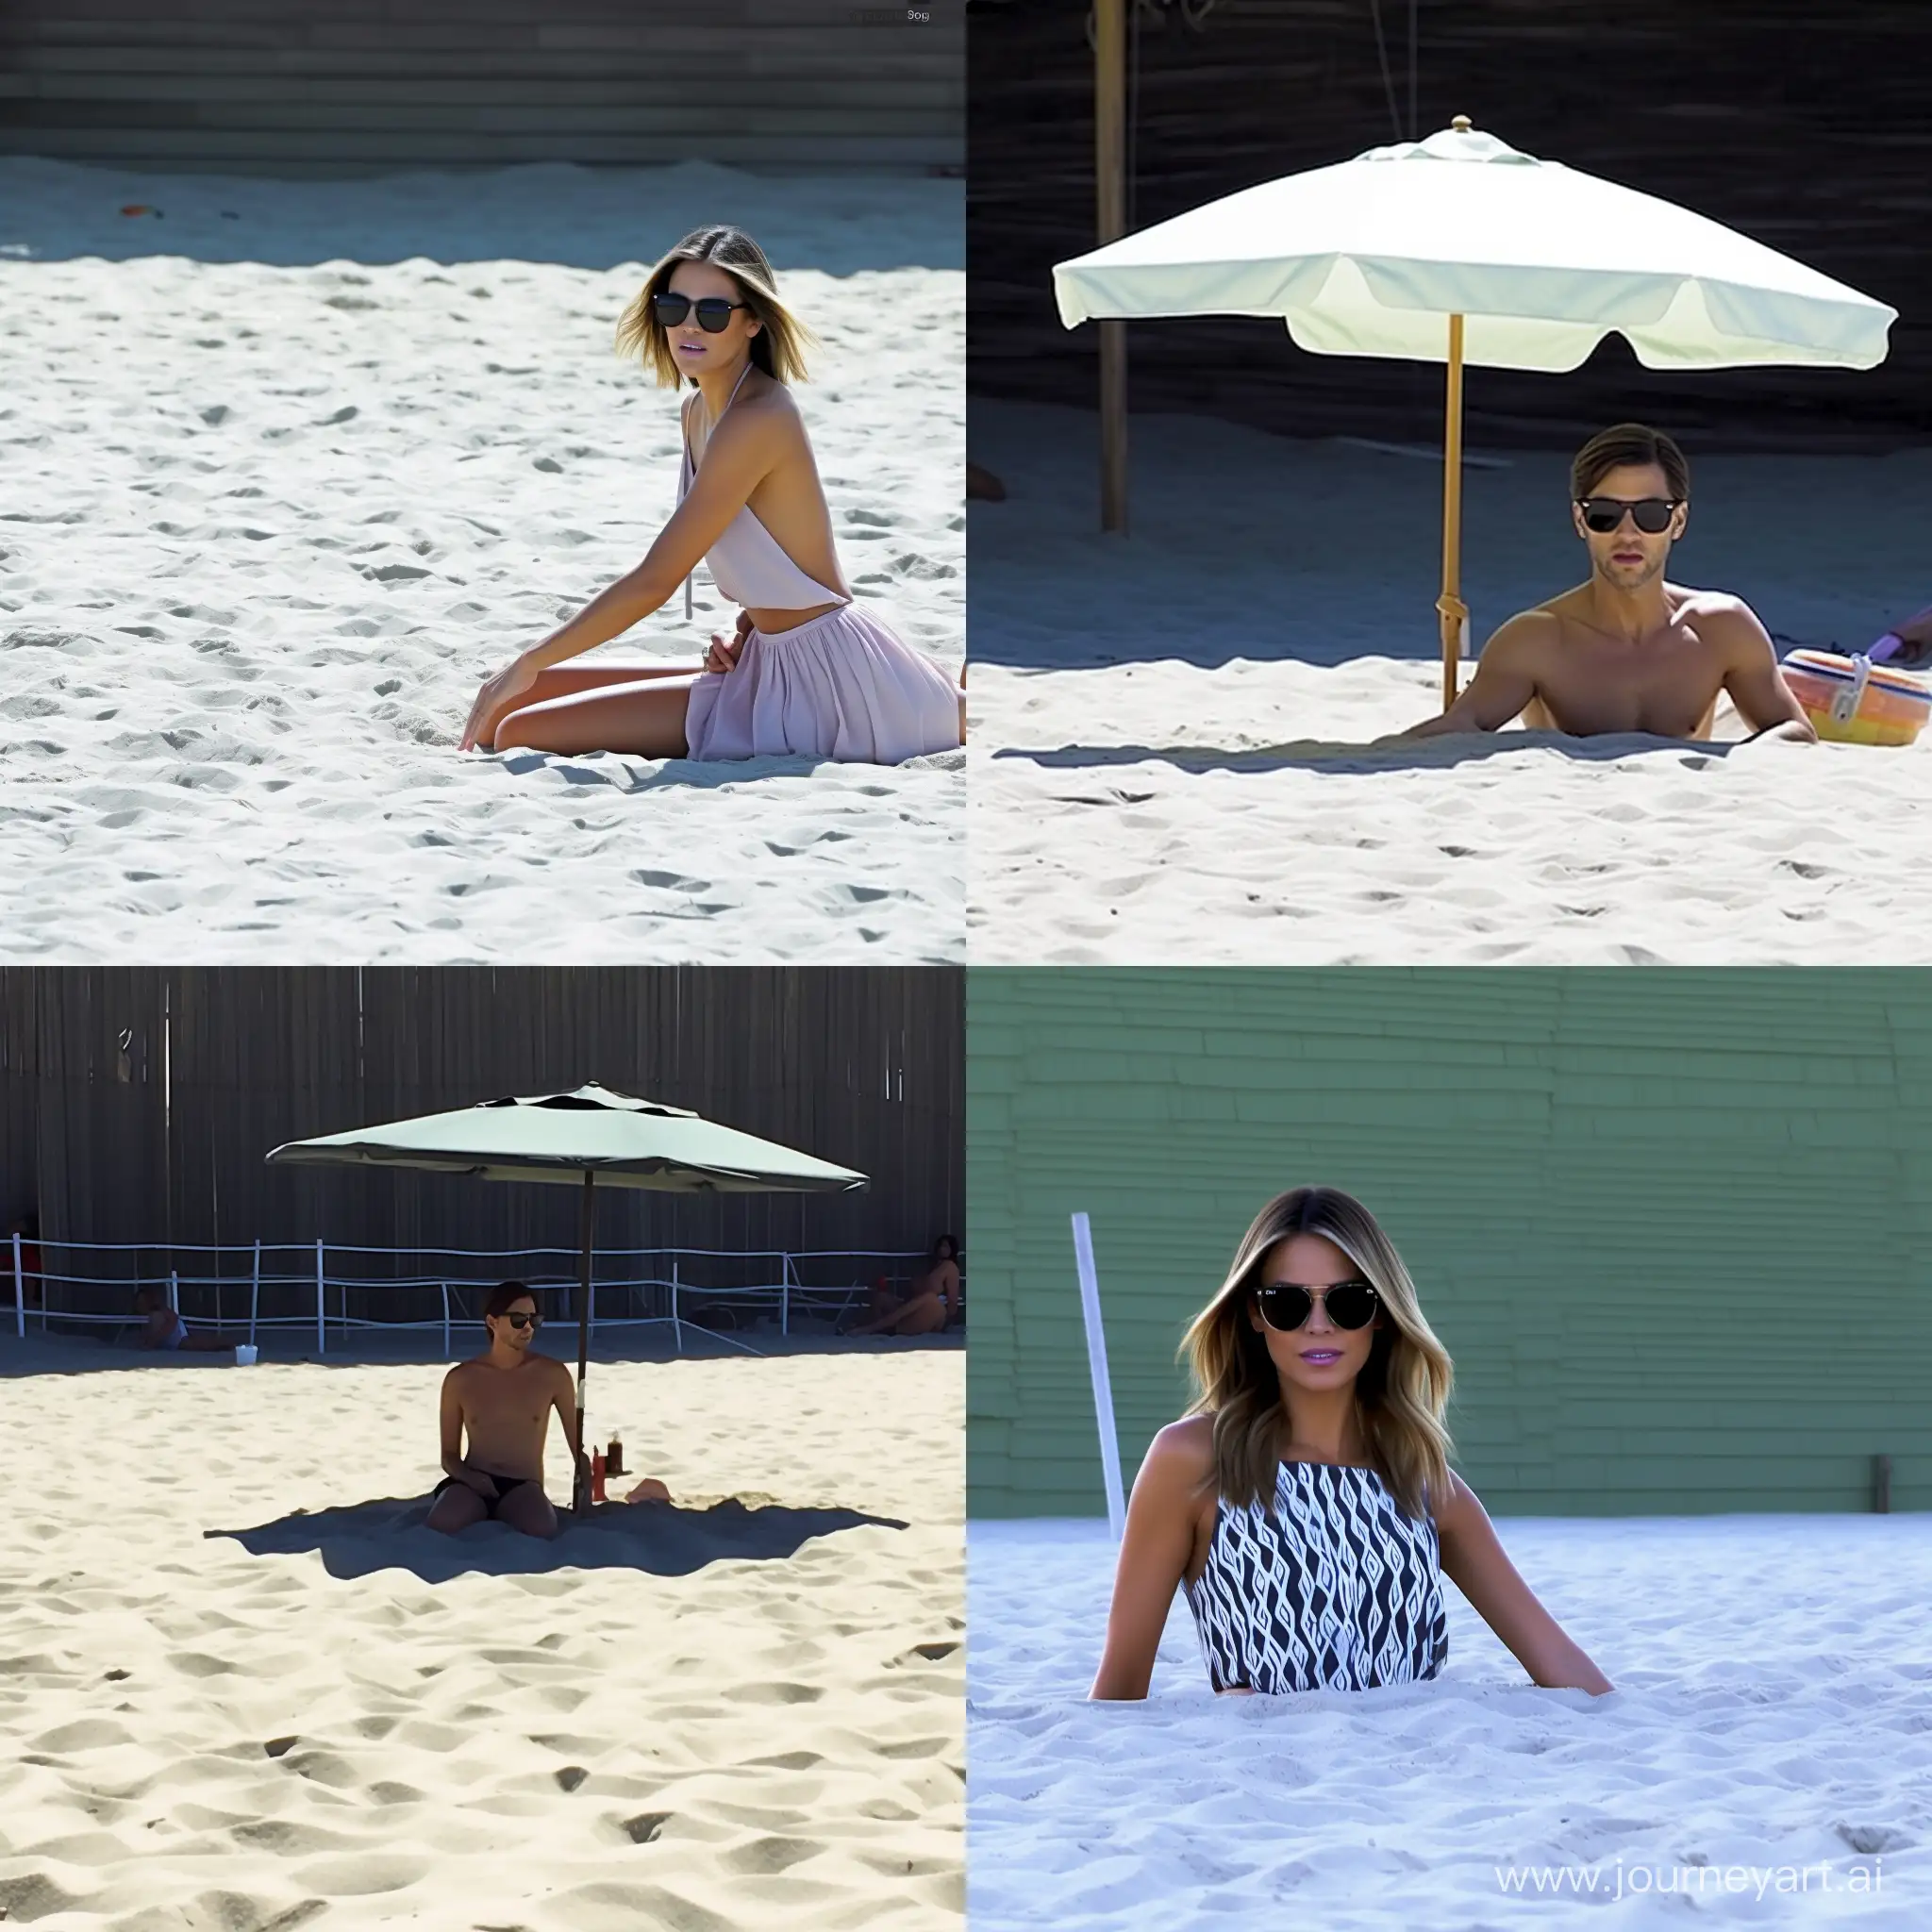 Jessica-Albas-Alluring-Beach-Elegance-Captured-in-Stunning-Bikini-Snapshot